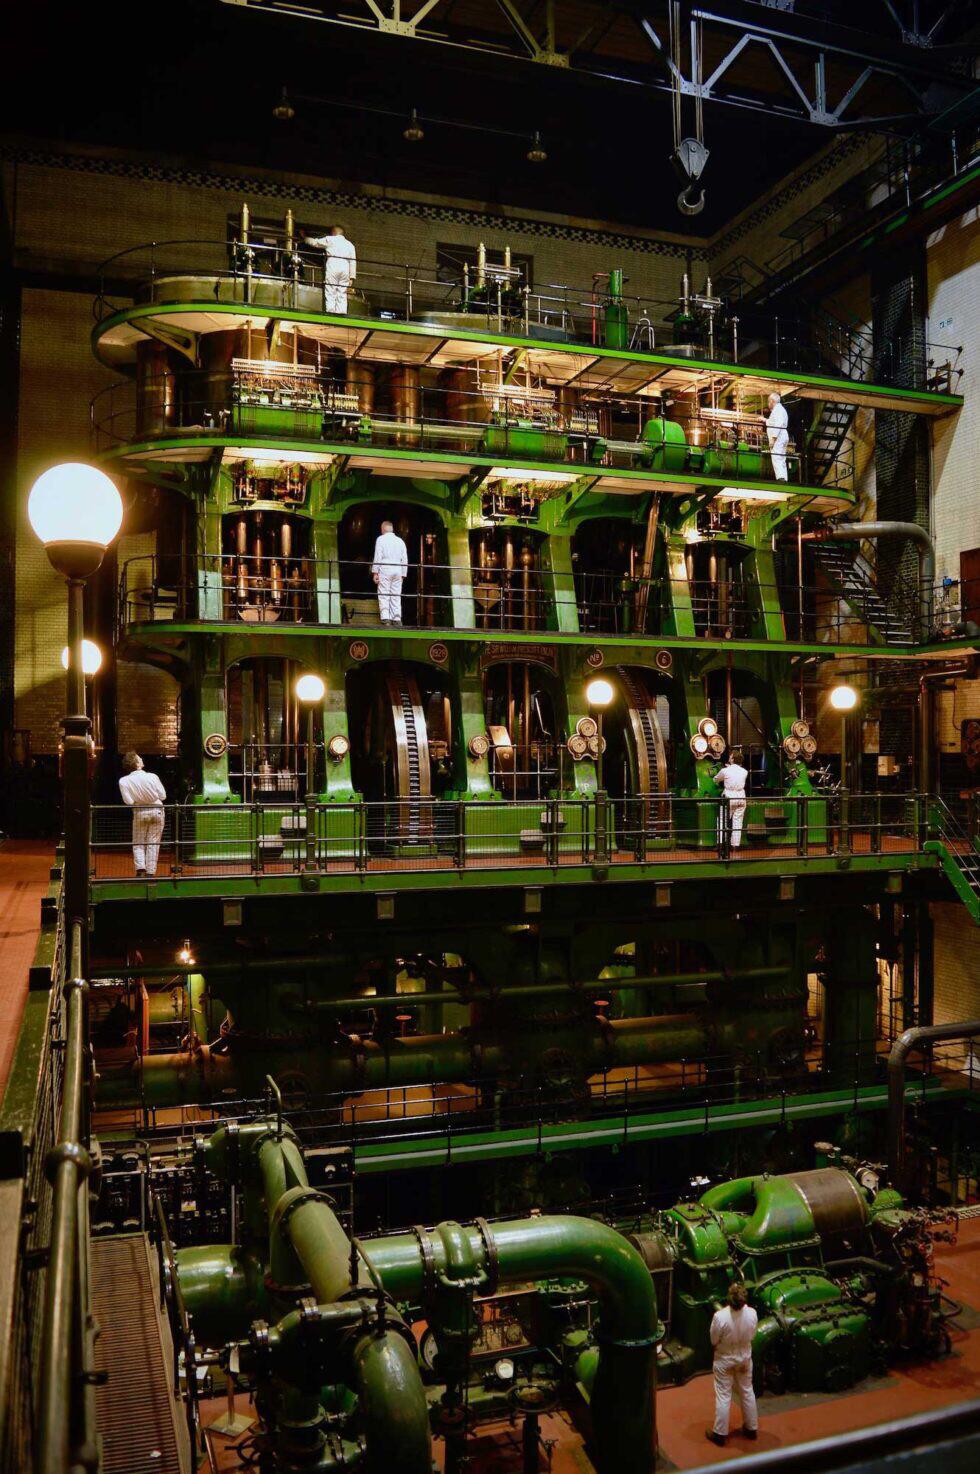 The World’s Largest Working Steam Engine